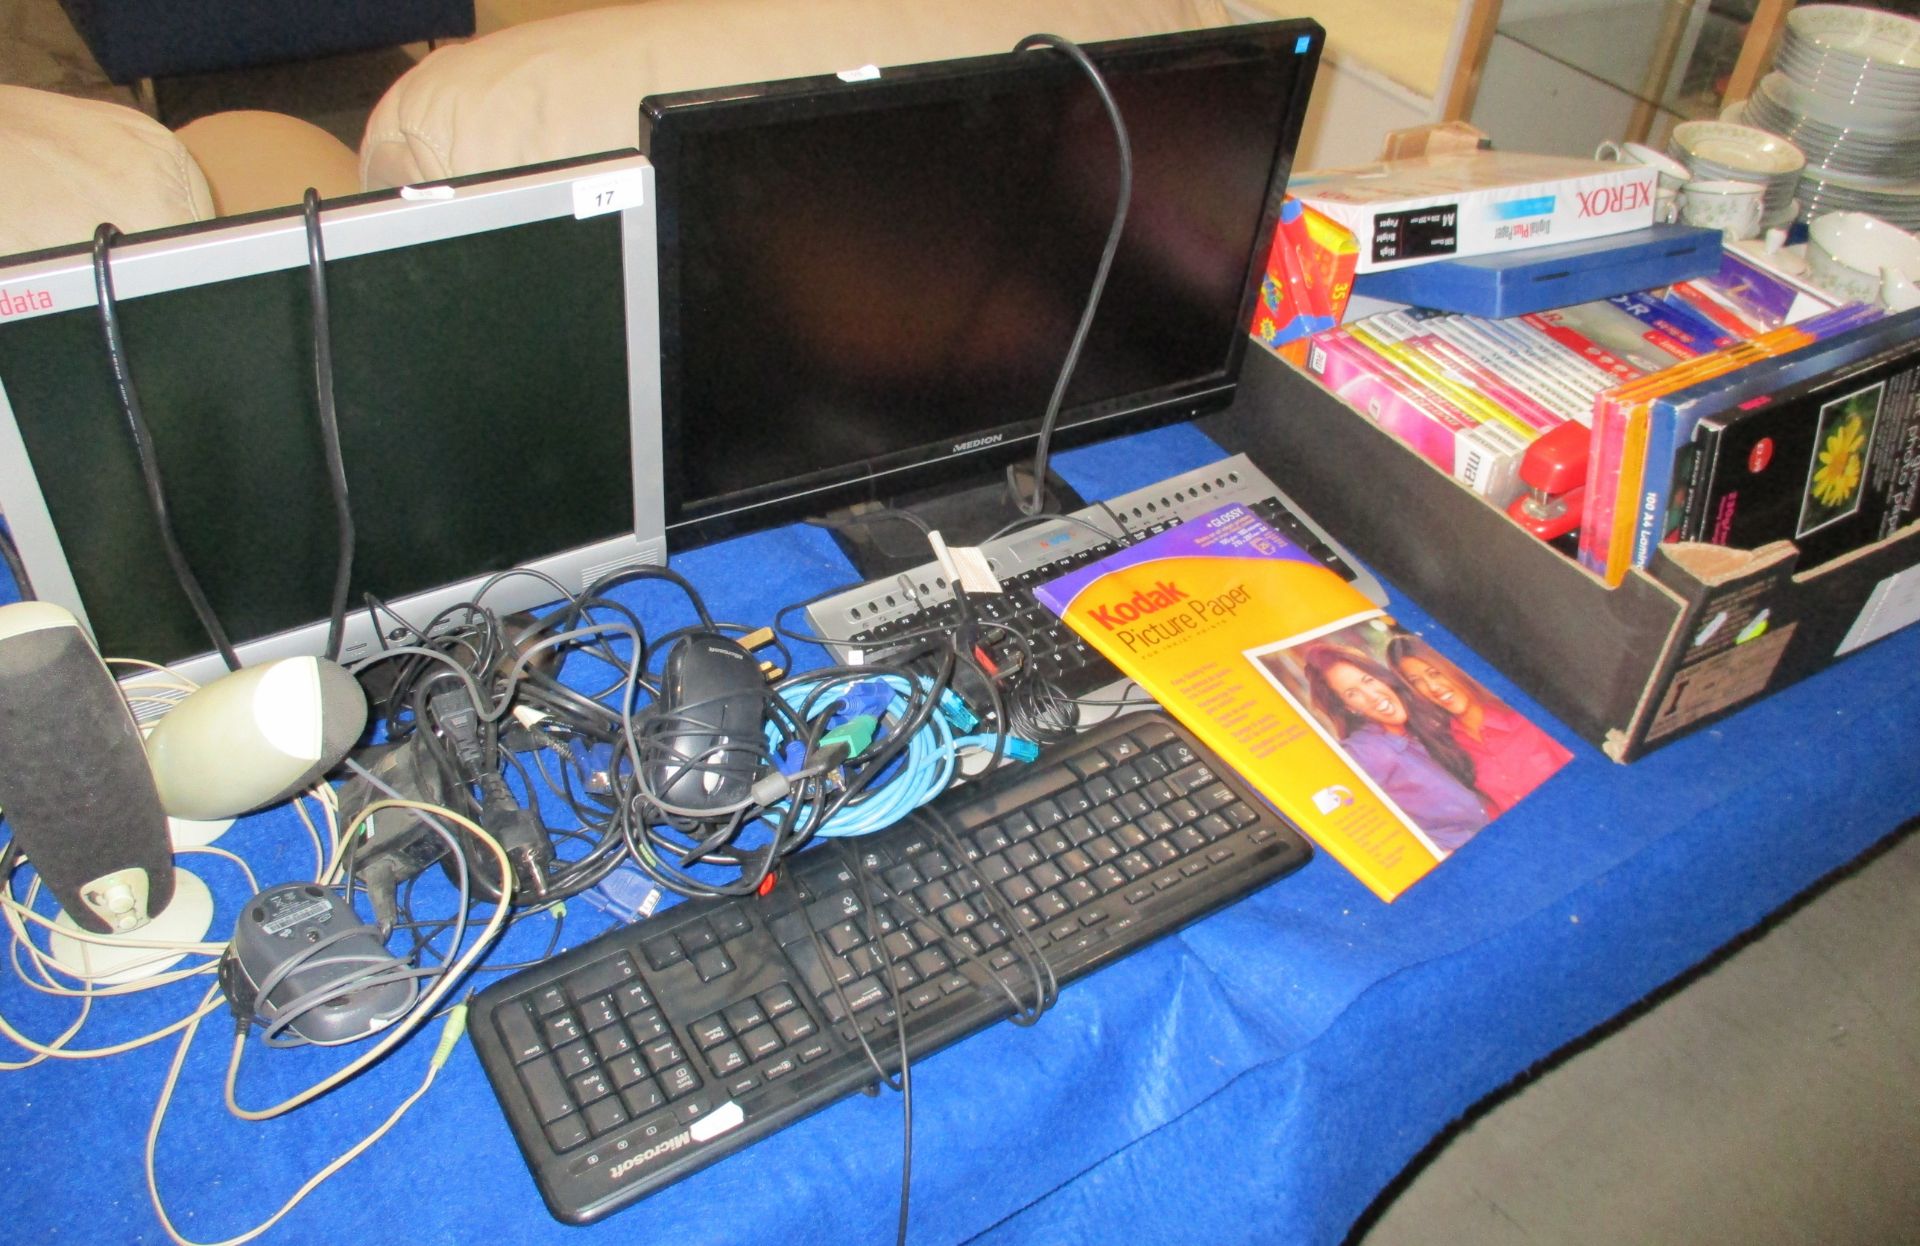 Medion 19" LCD monitor, A-data LCD monitor, keyboards, mice, DVD and RW disks,